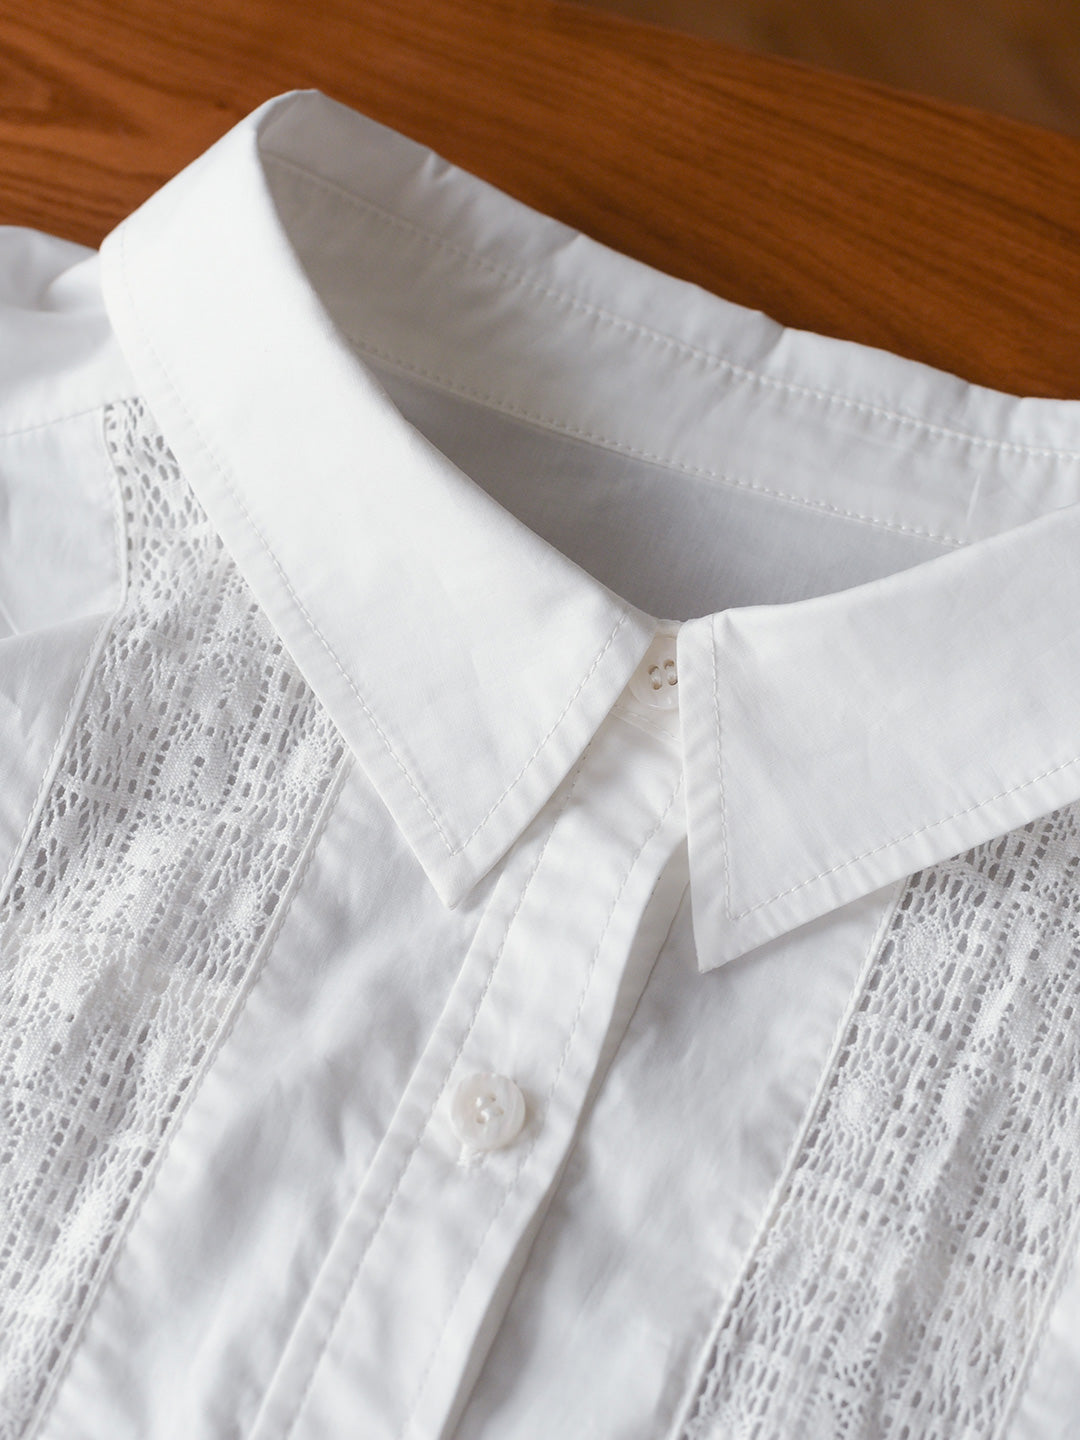 Ainsley 鏤空純棉荷葉邊白襯衫